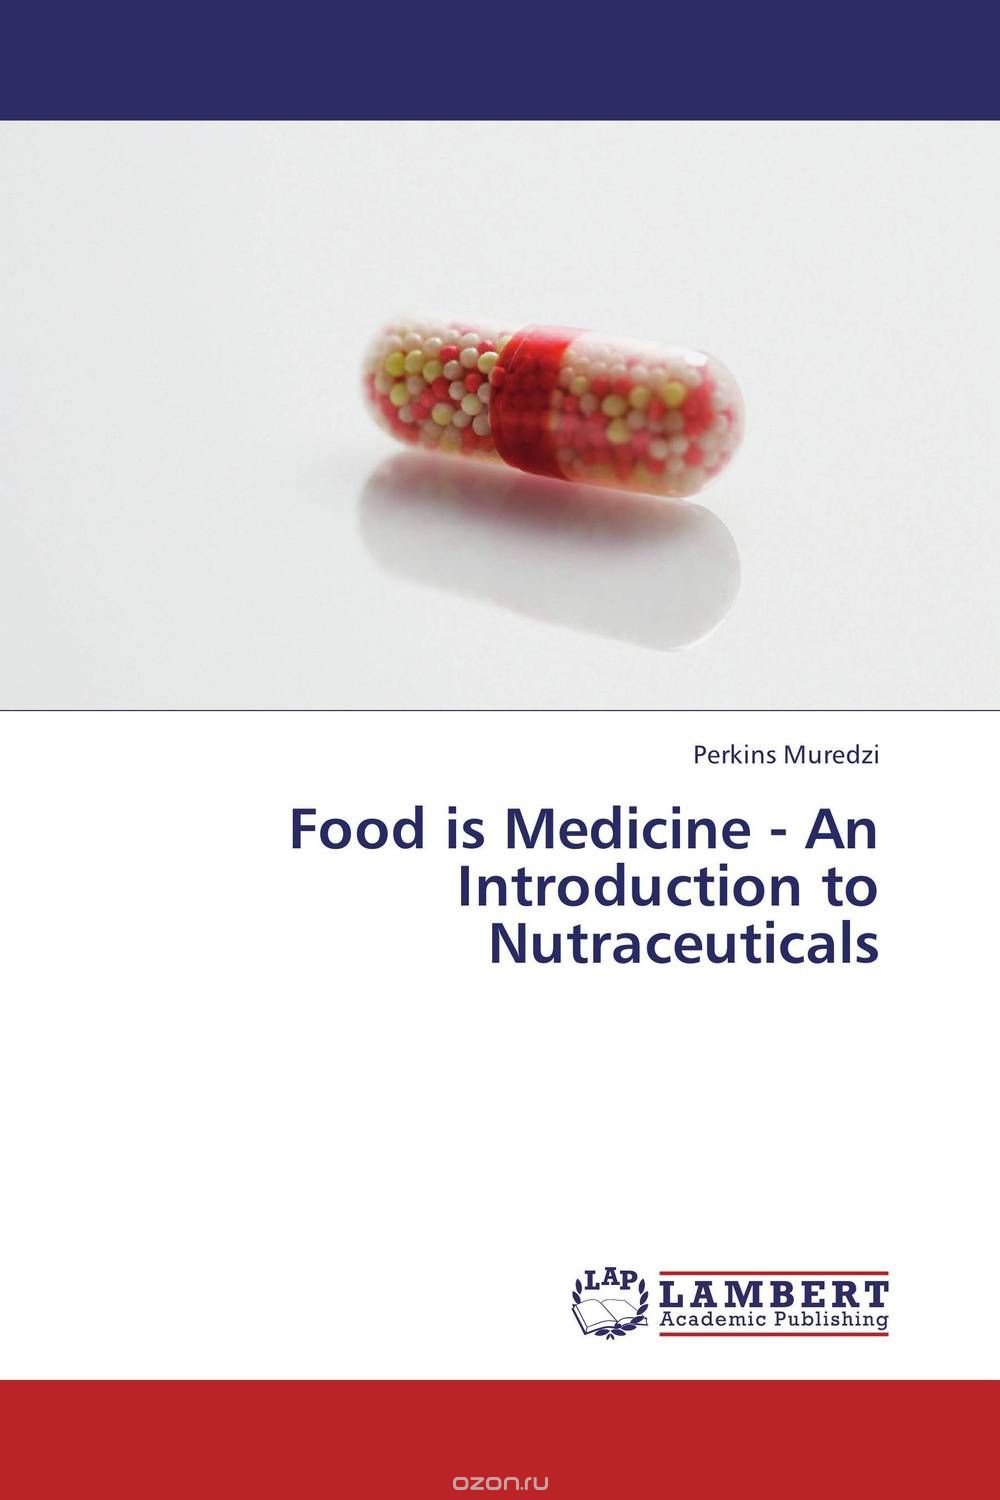 Скачать книгу "Food is Medicine - An Introduction to Nutraceuticals"